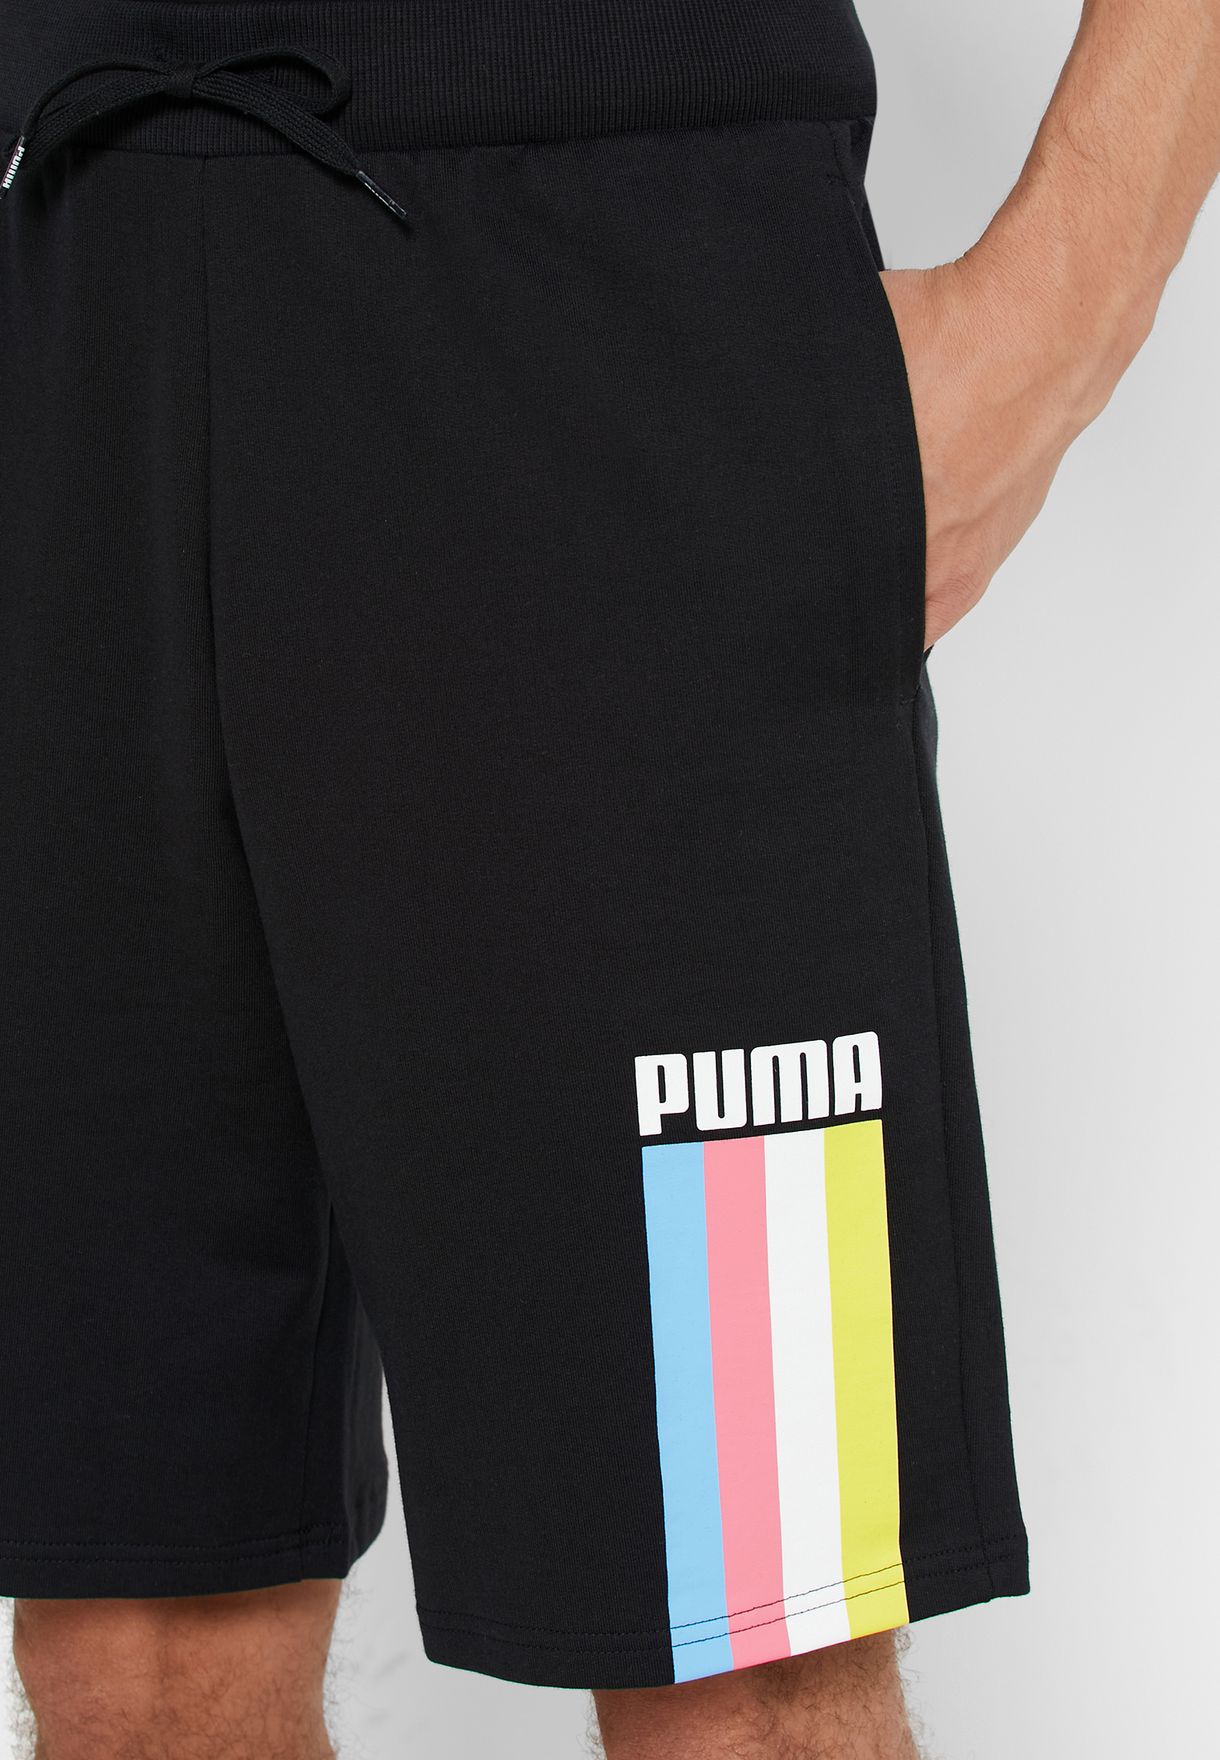 puma athletic apparel